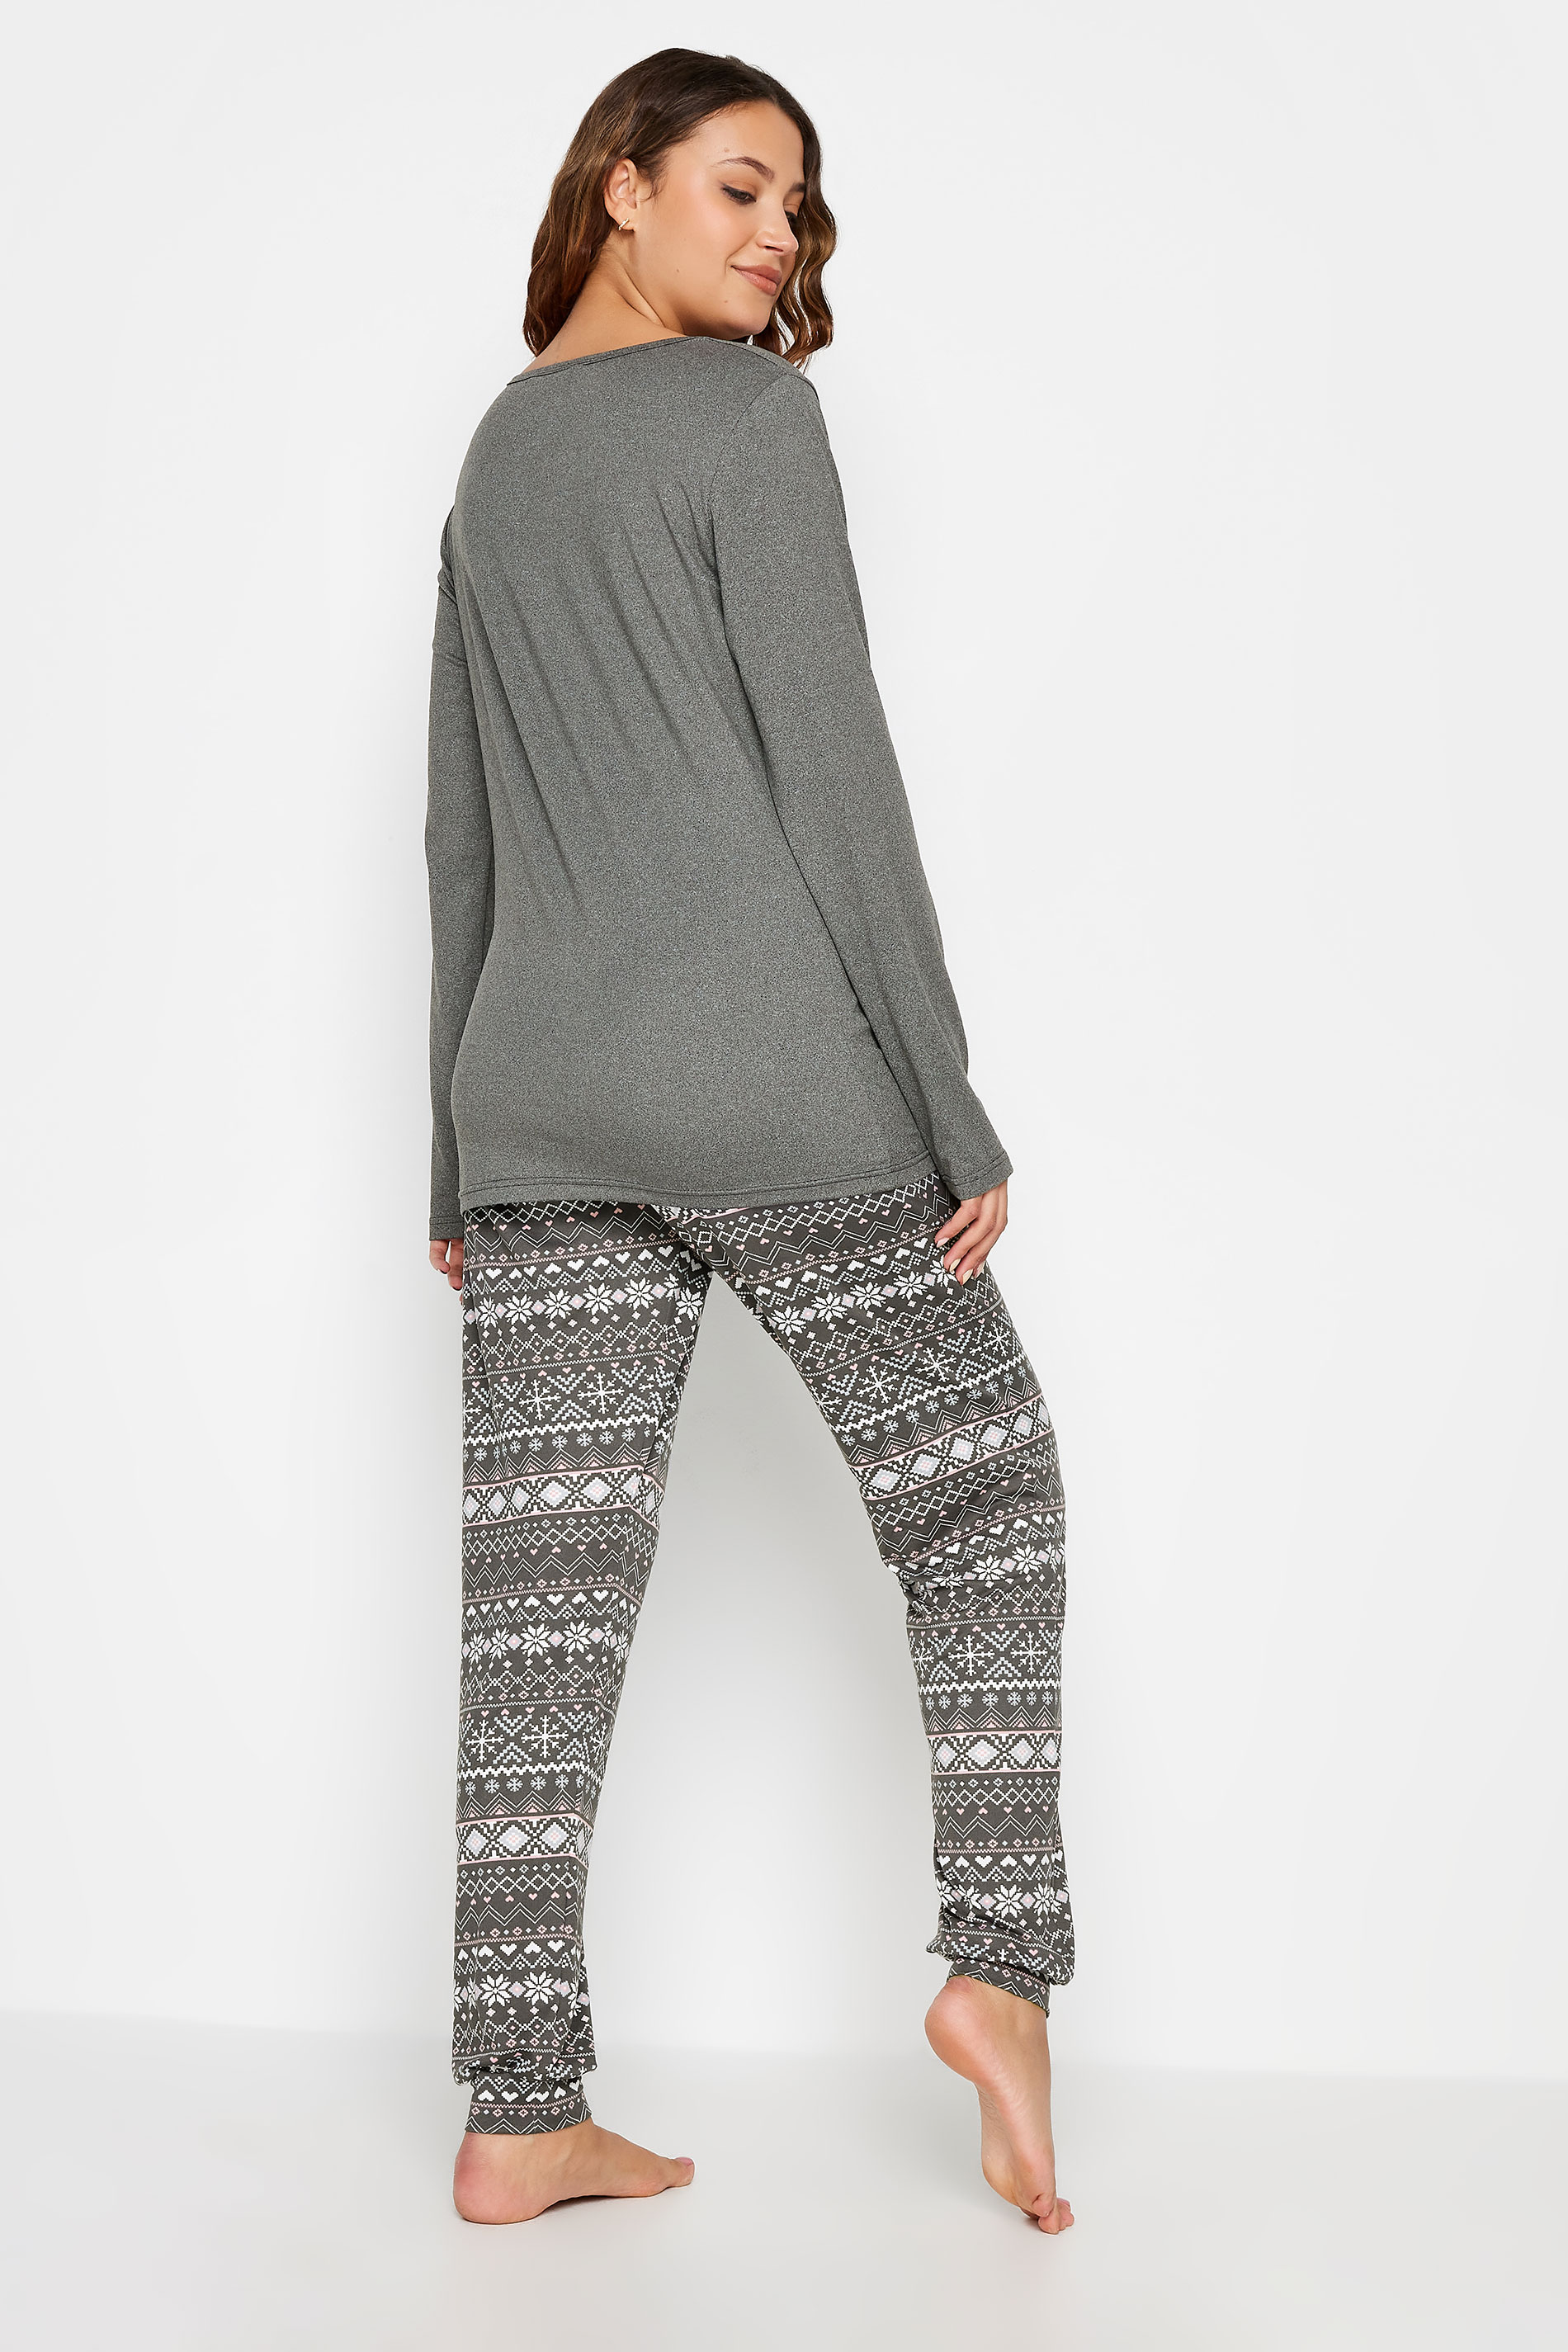 LTS Tall Women's Grey Fairisle Print Soft Touch Pyjama Set | Long Tall Sally 3